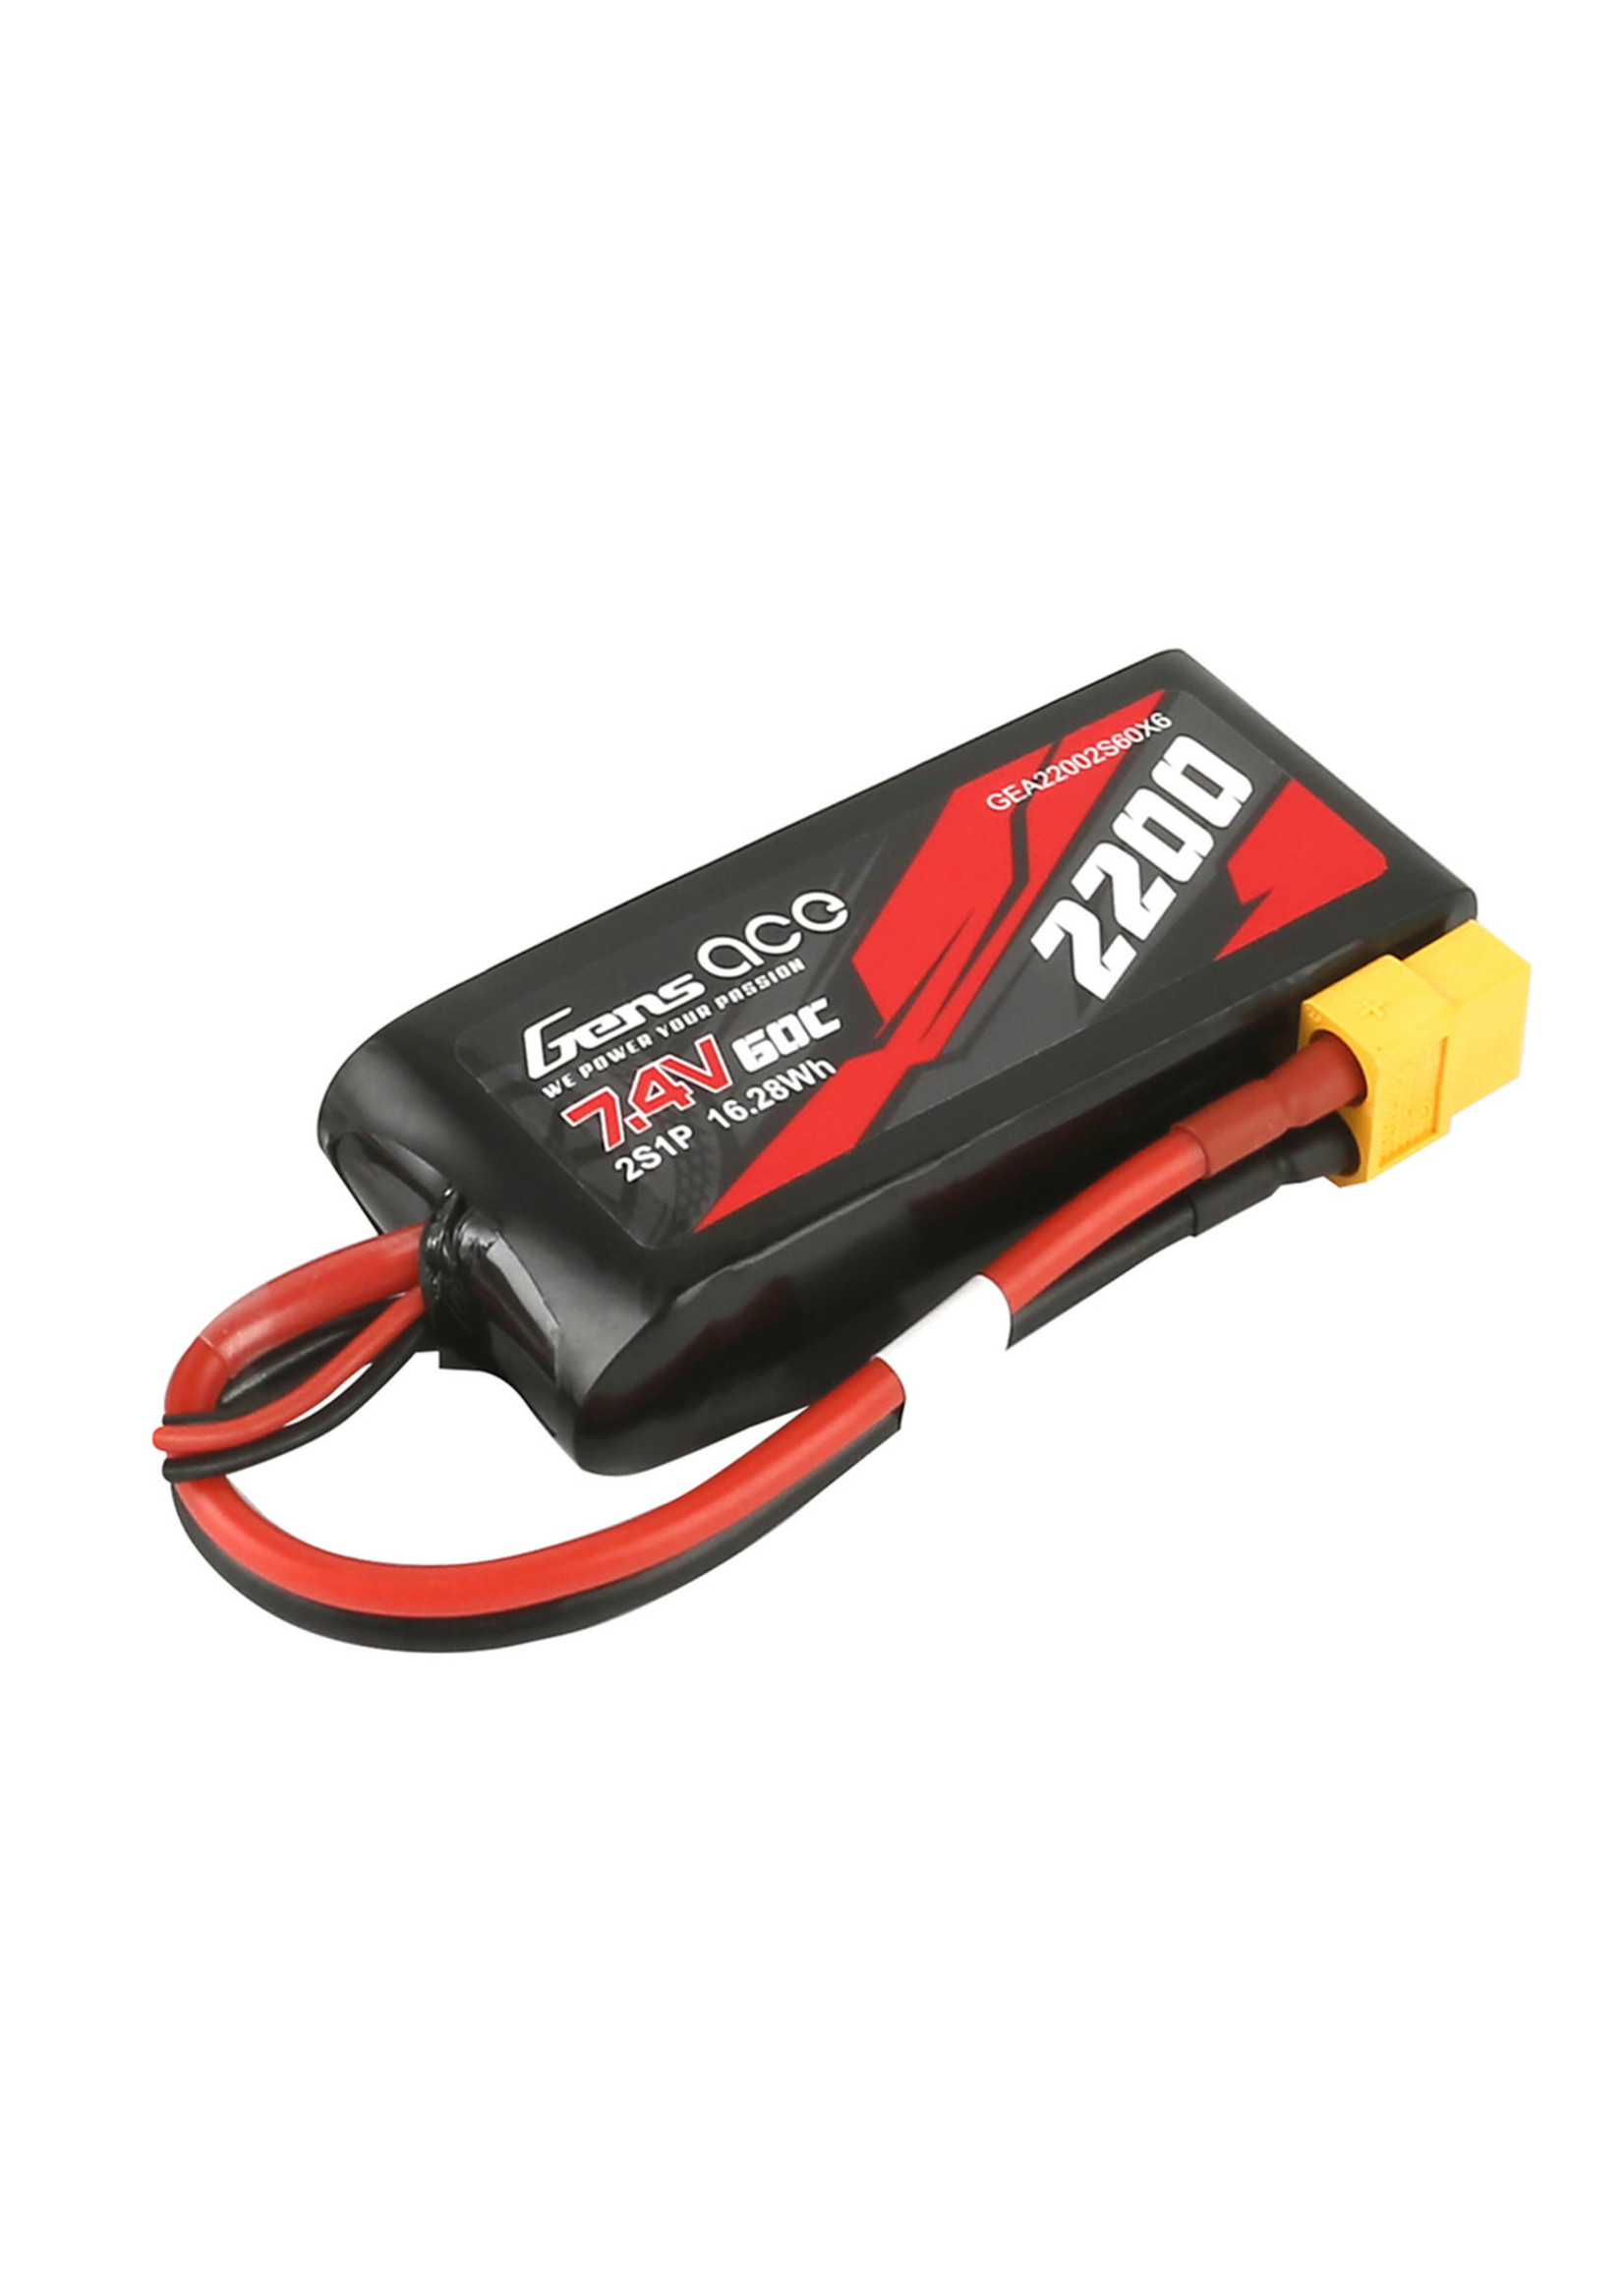 GensAce/Tattu GEA22002S60X6 Gens Ace 60C 2S1P 7.4 v 2200mah Lipo Battery Pack with XT60 Plug